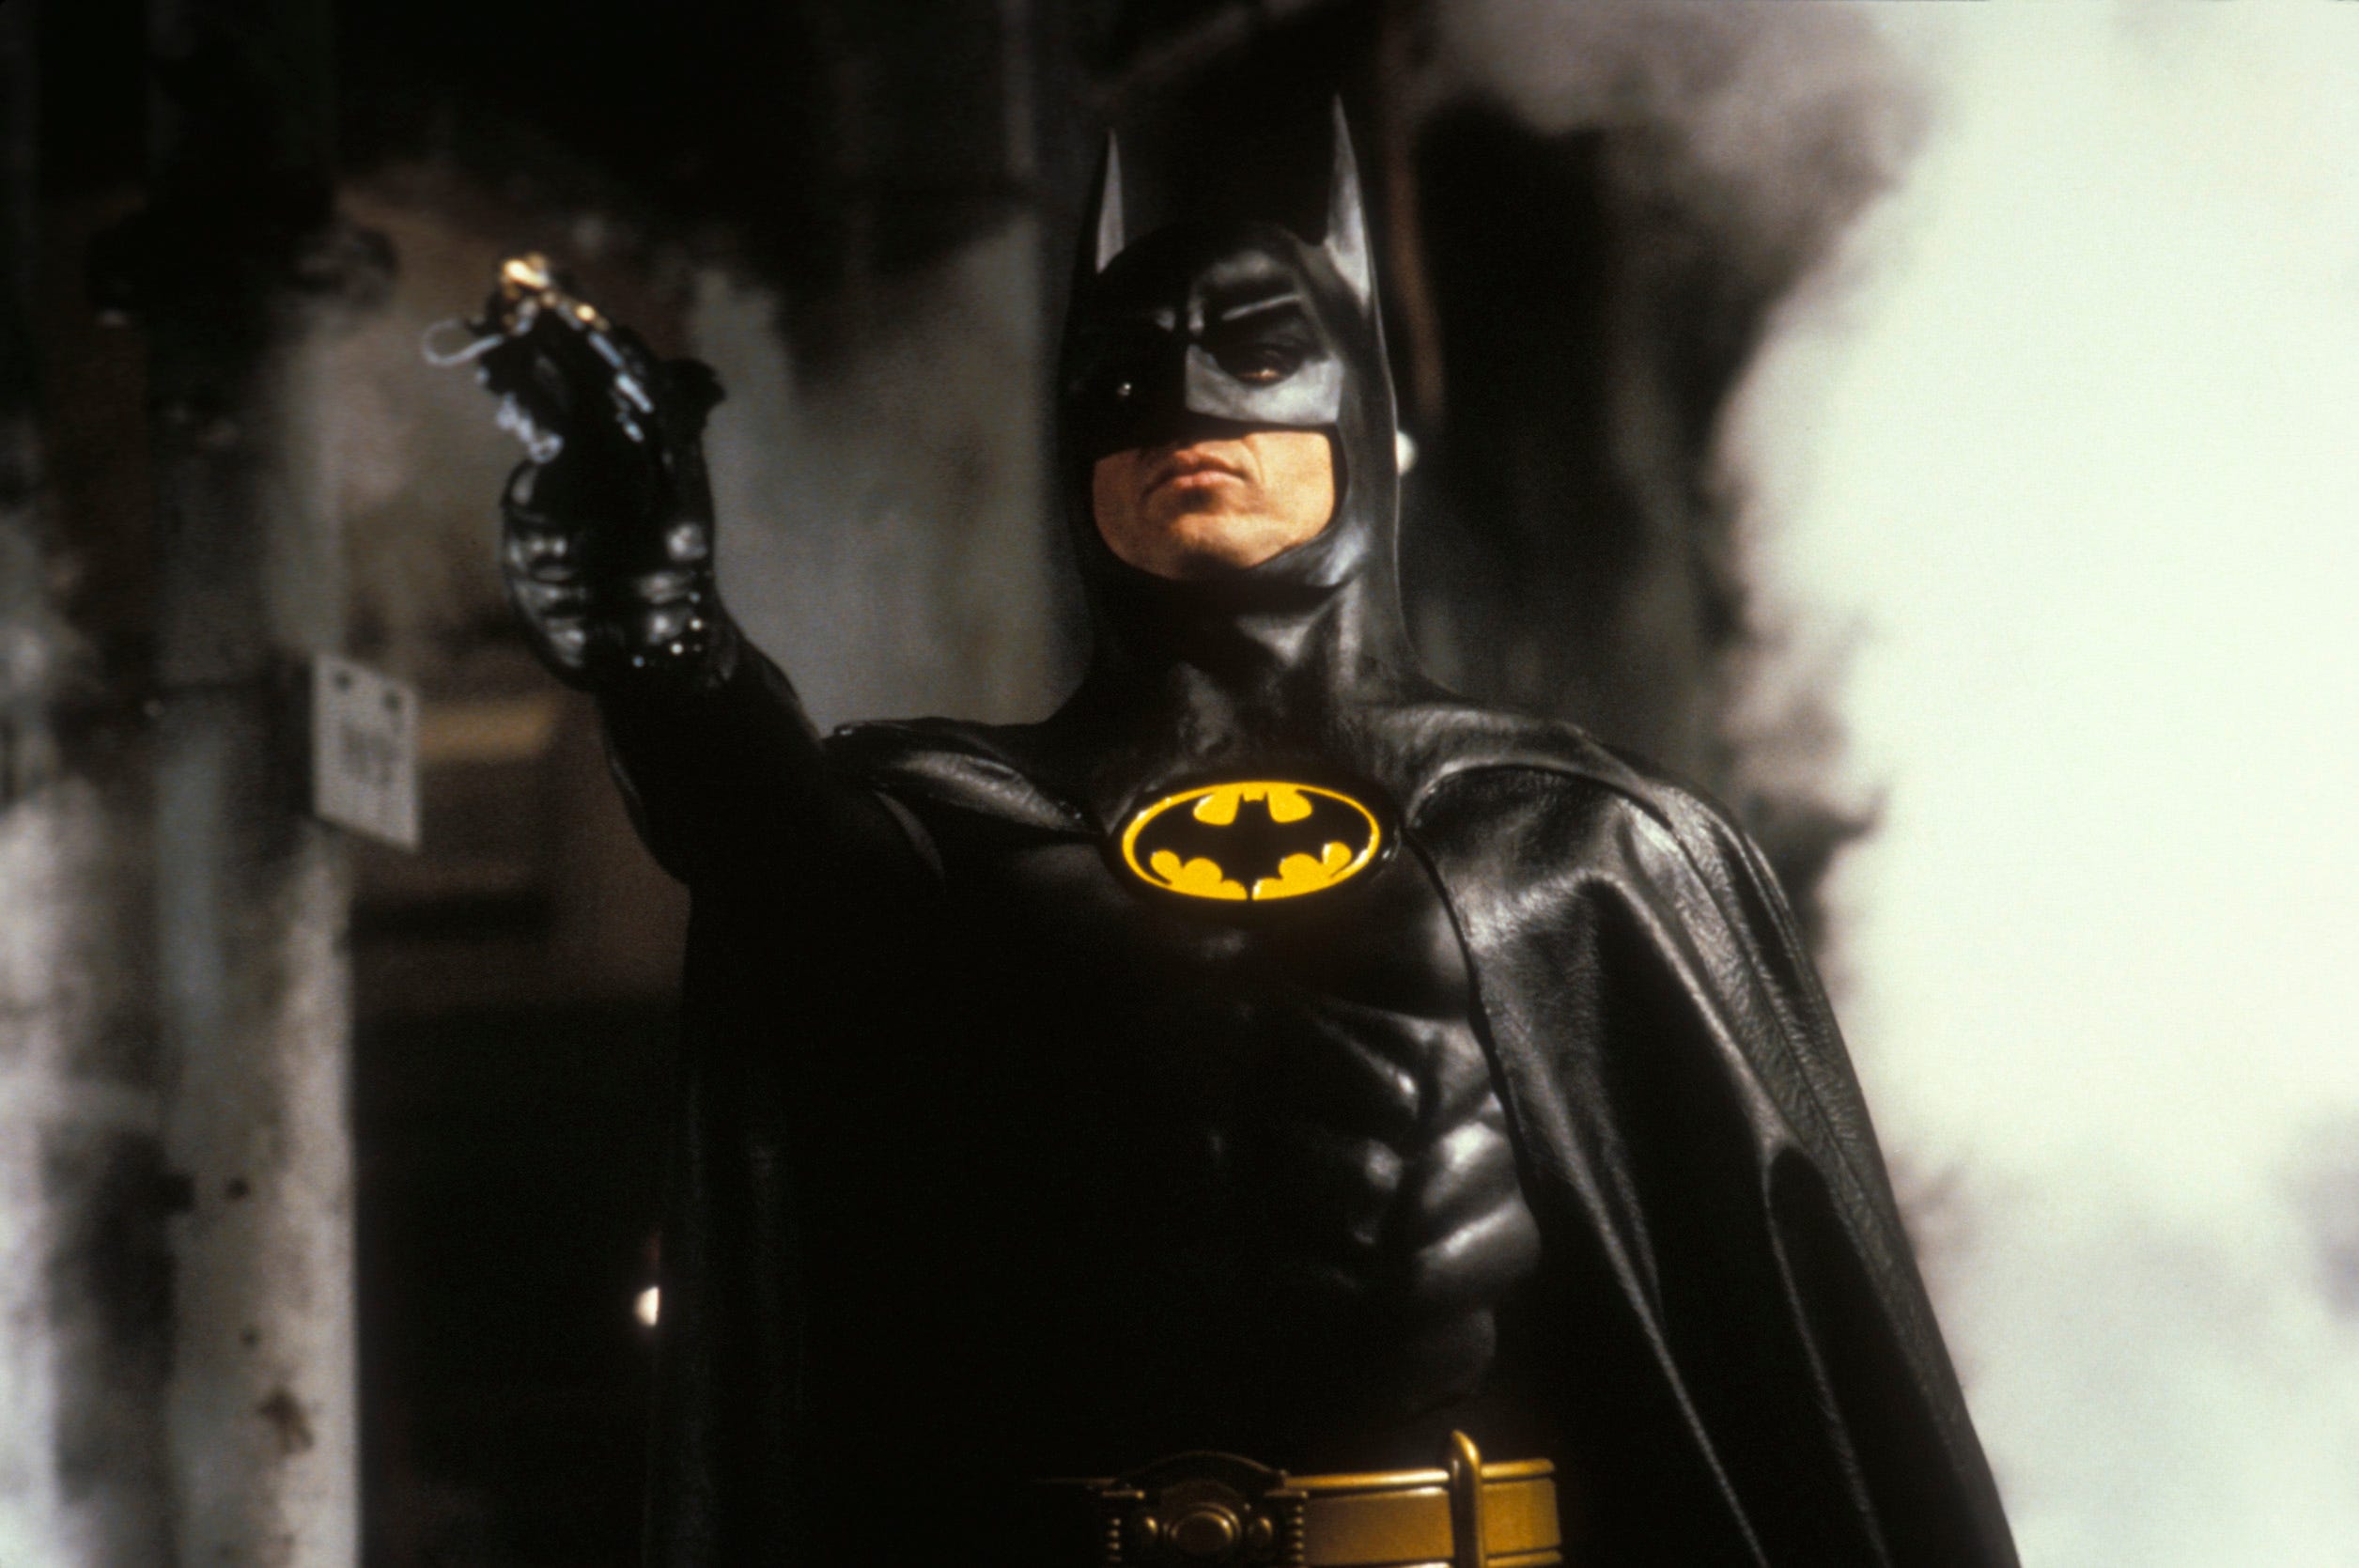 Batman Michael Keaton's 'The Flash' first footage evokes iconic line